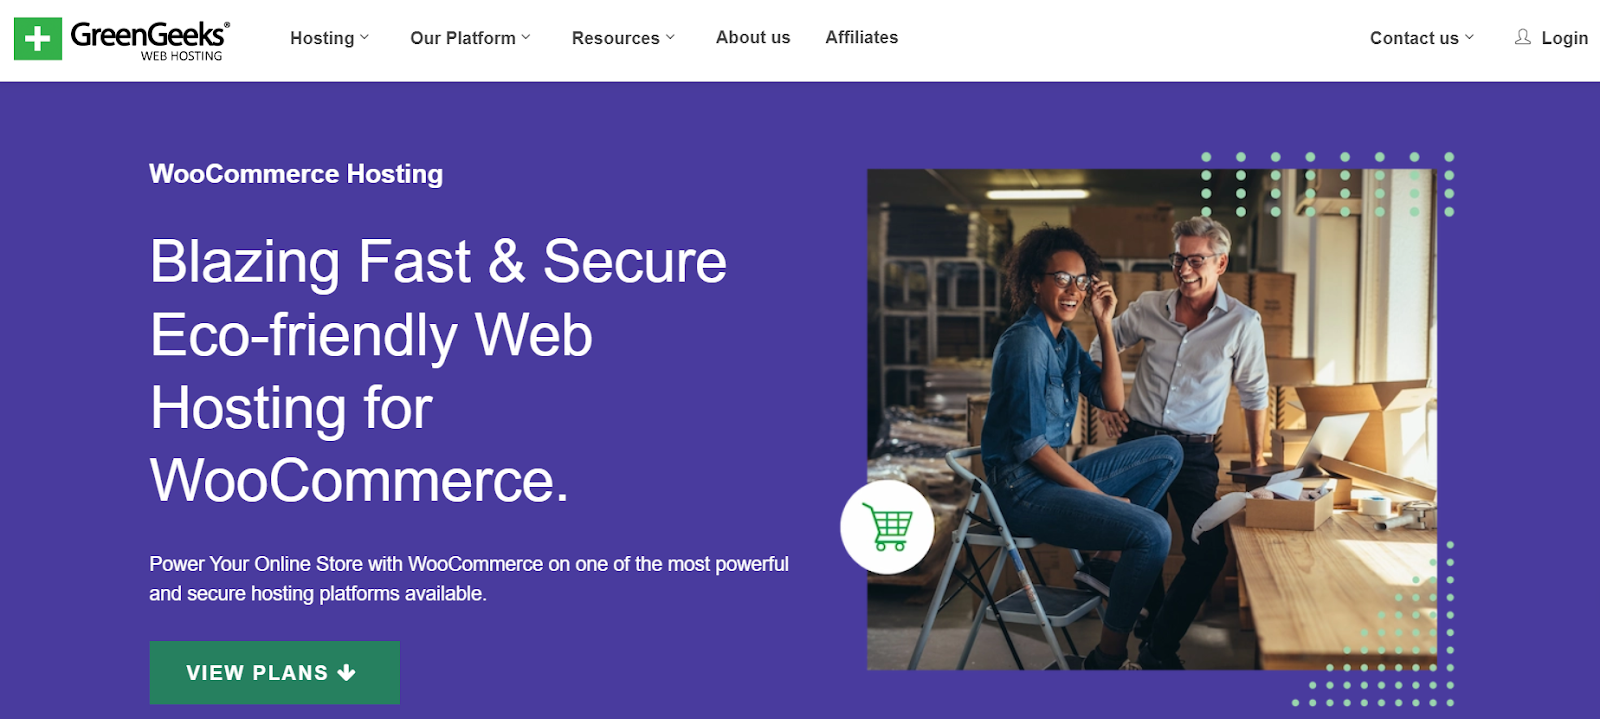 GreenGeeks WooCommerce Hosting Providers